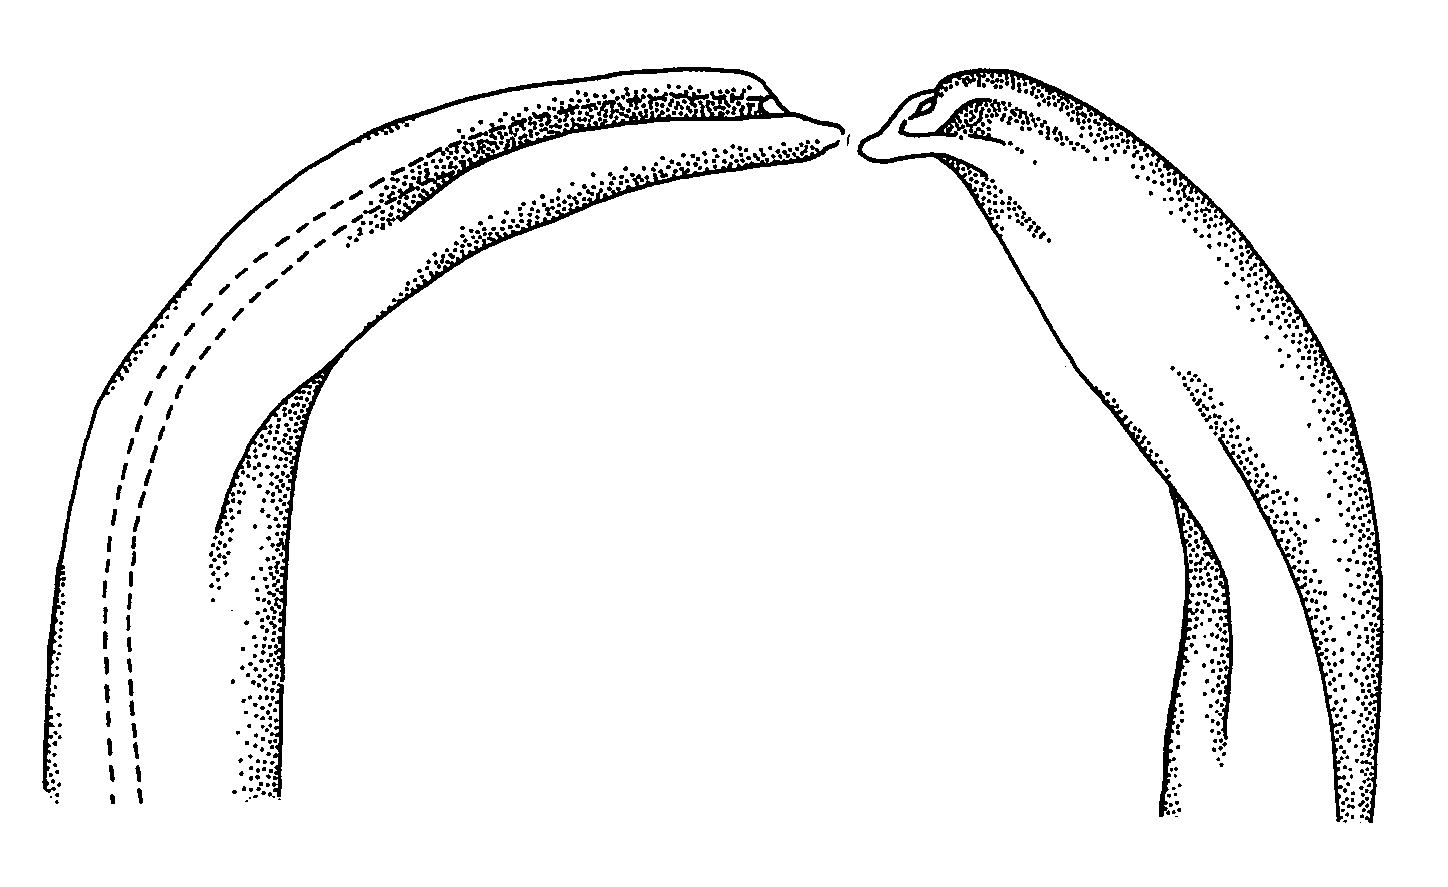 Uca stylifera: Crane (1975) image